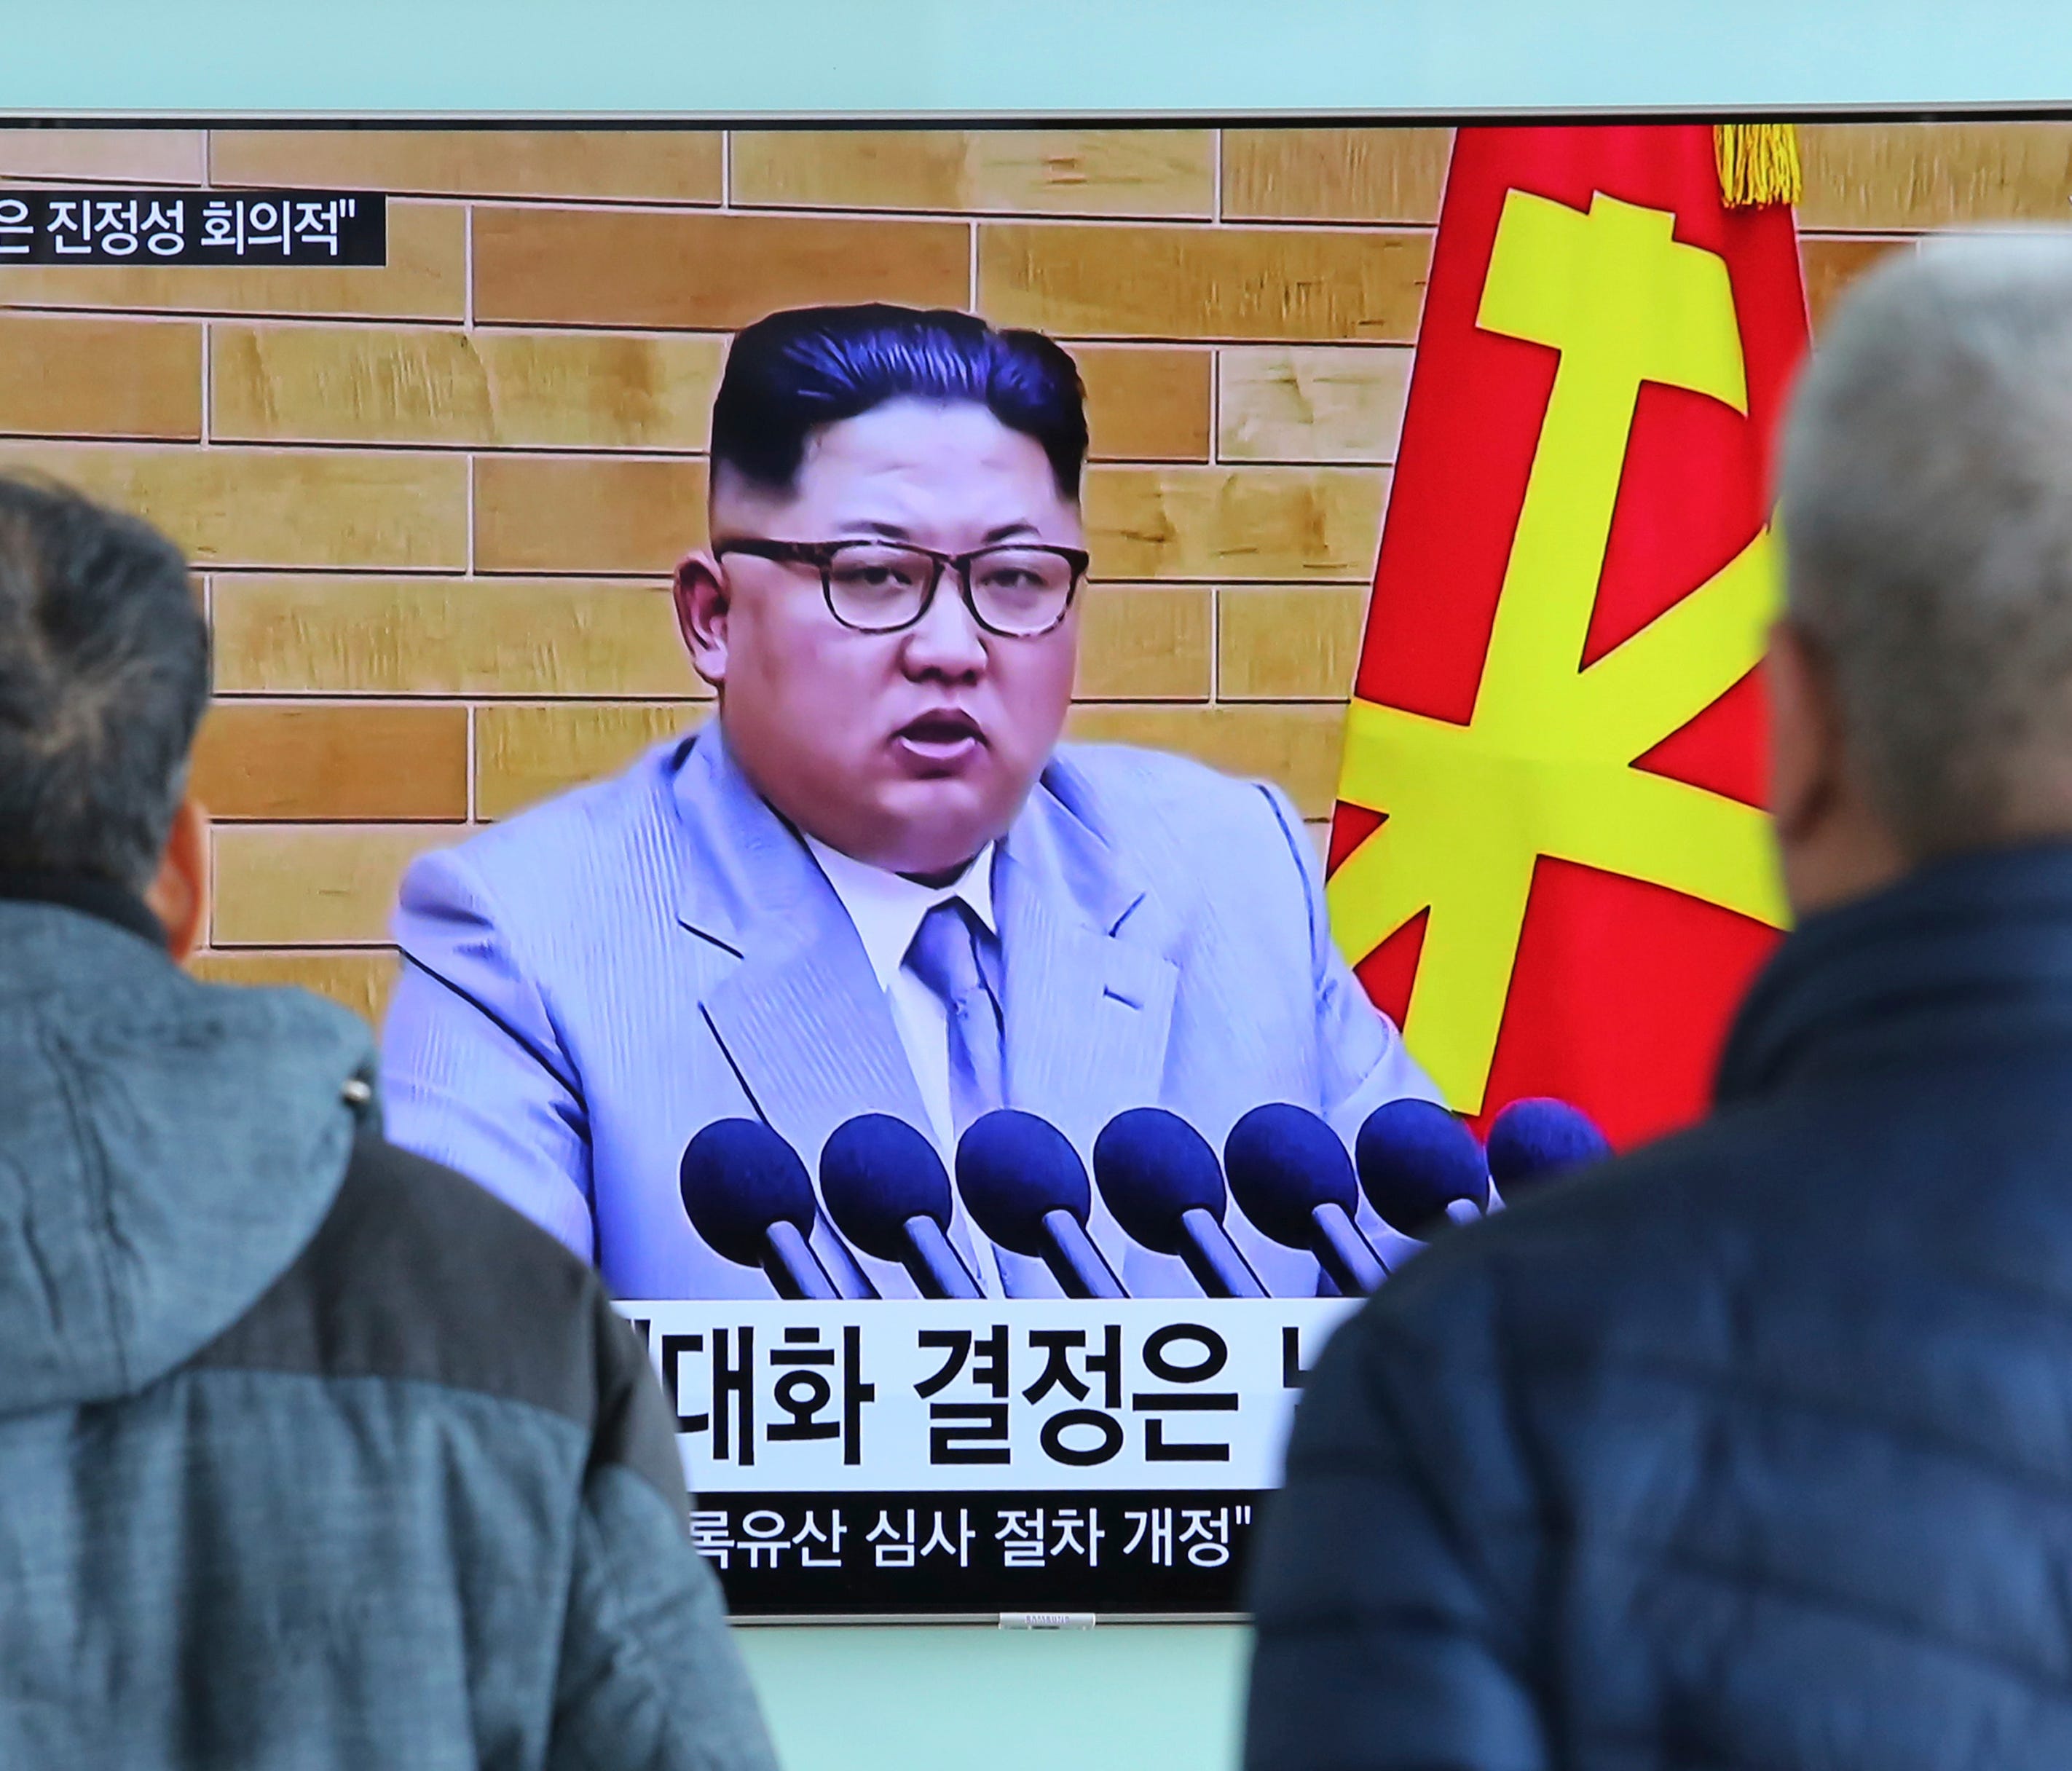 People watch a TV screen showing North Korean leader Kim Jong Un's New Year's speech.